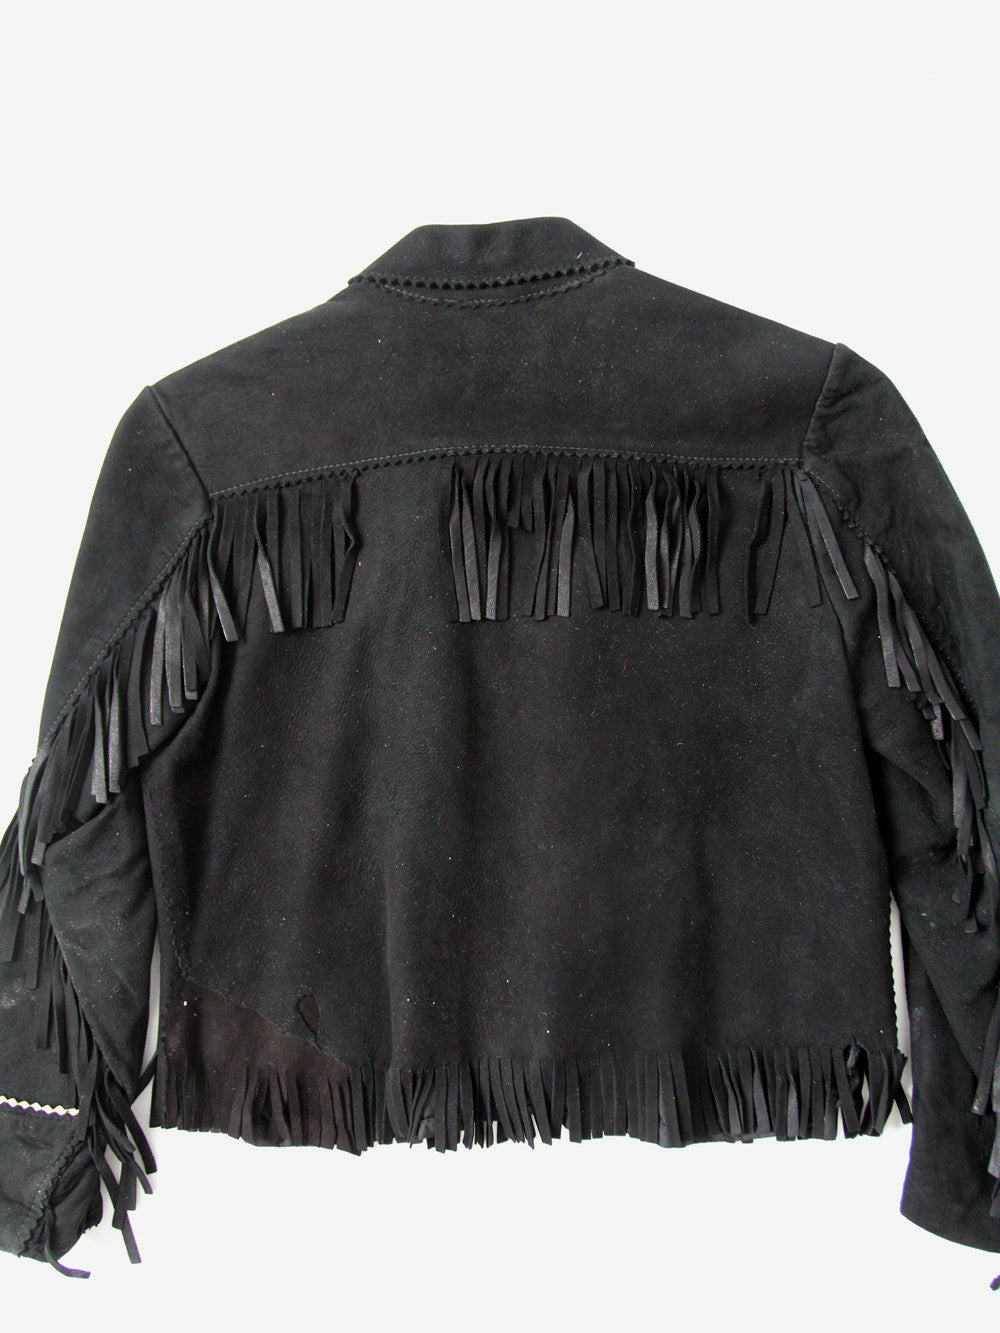 vintage children's western leather jacket